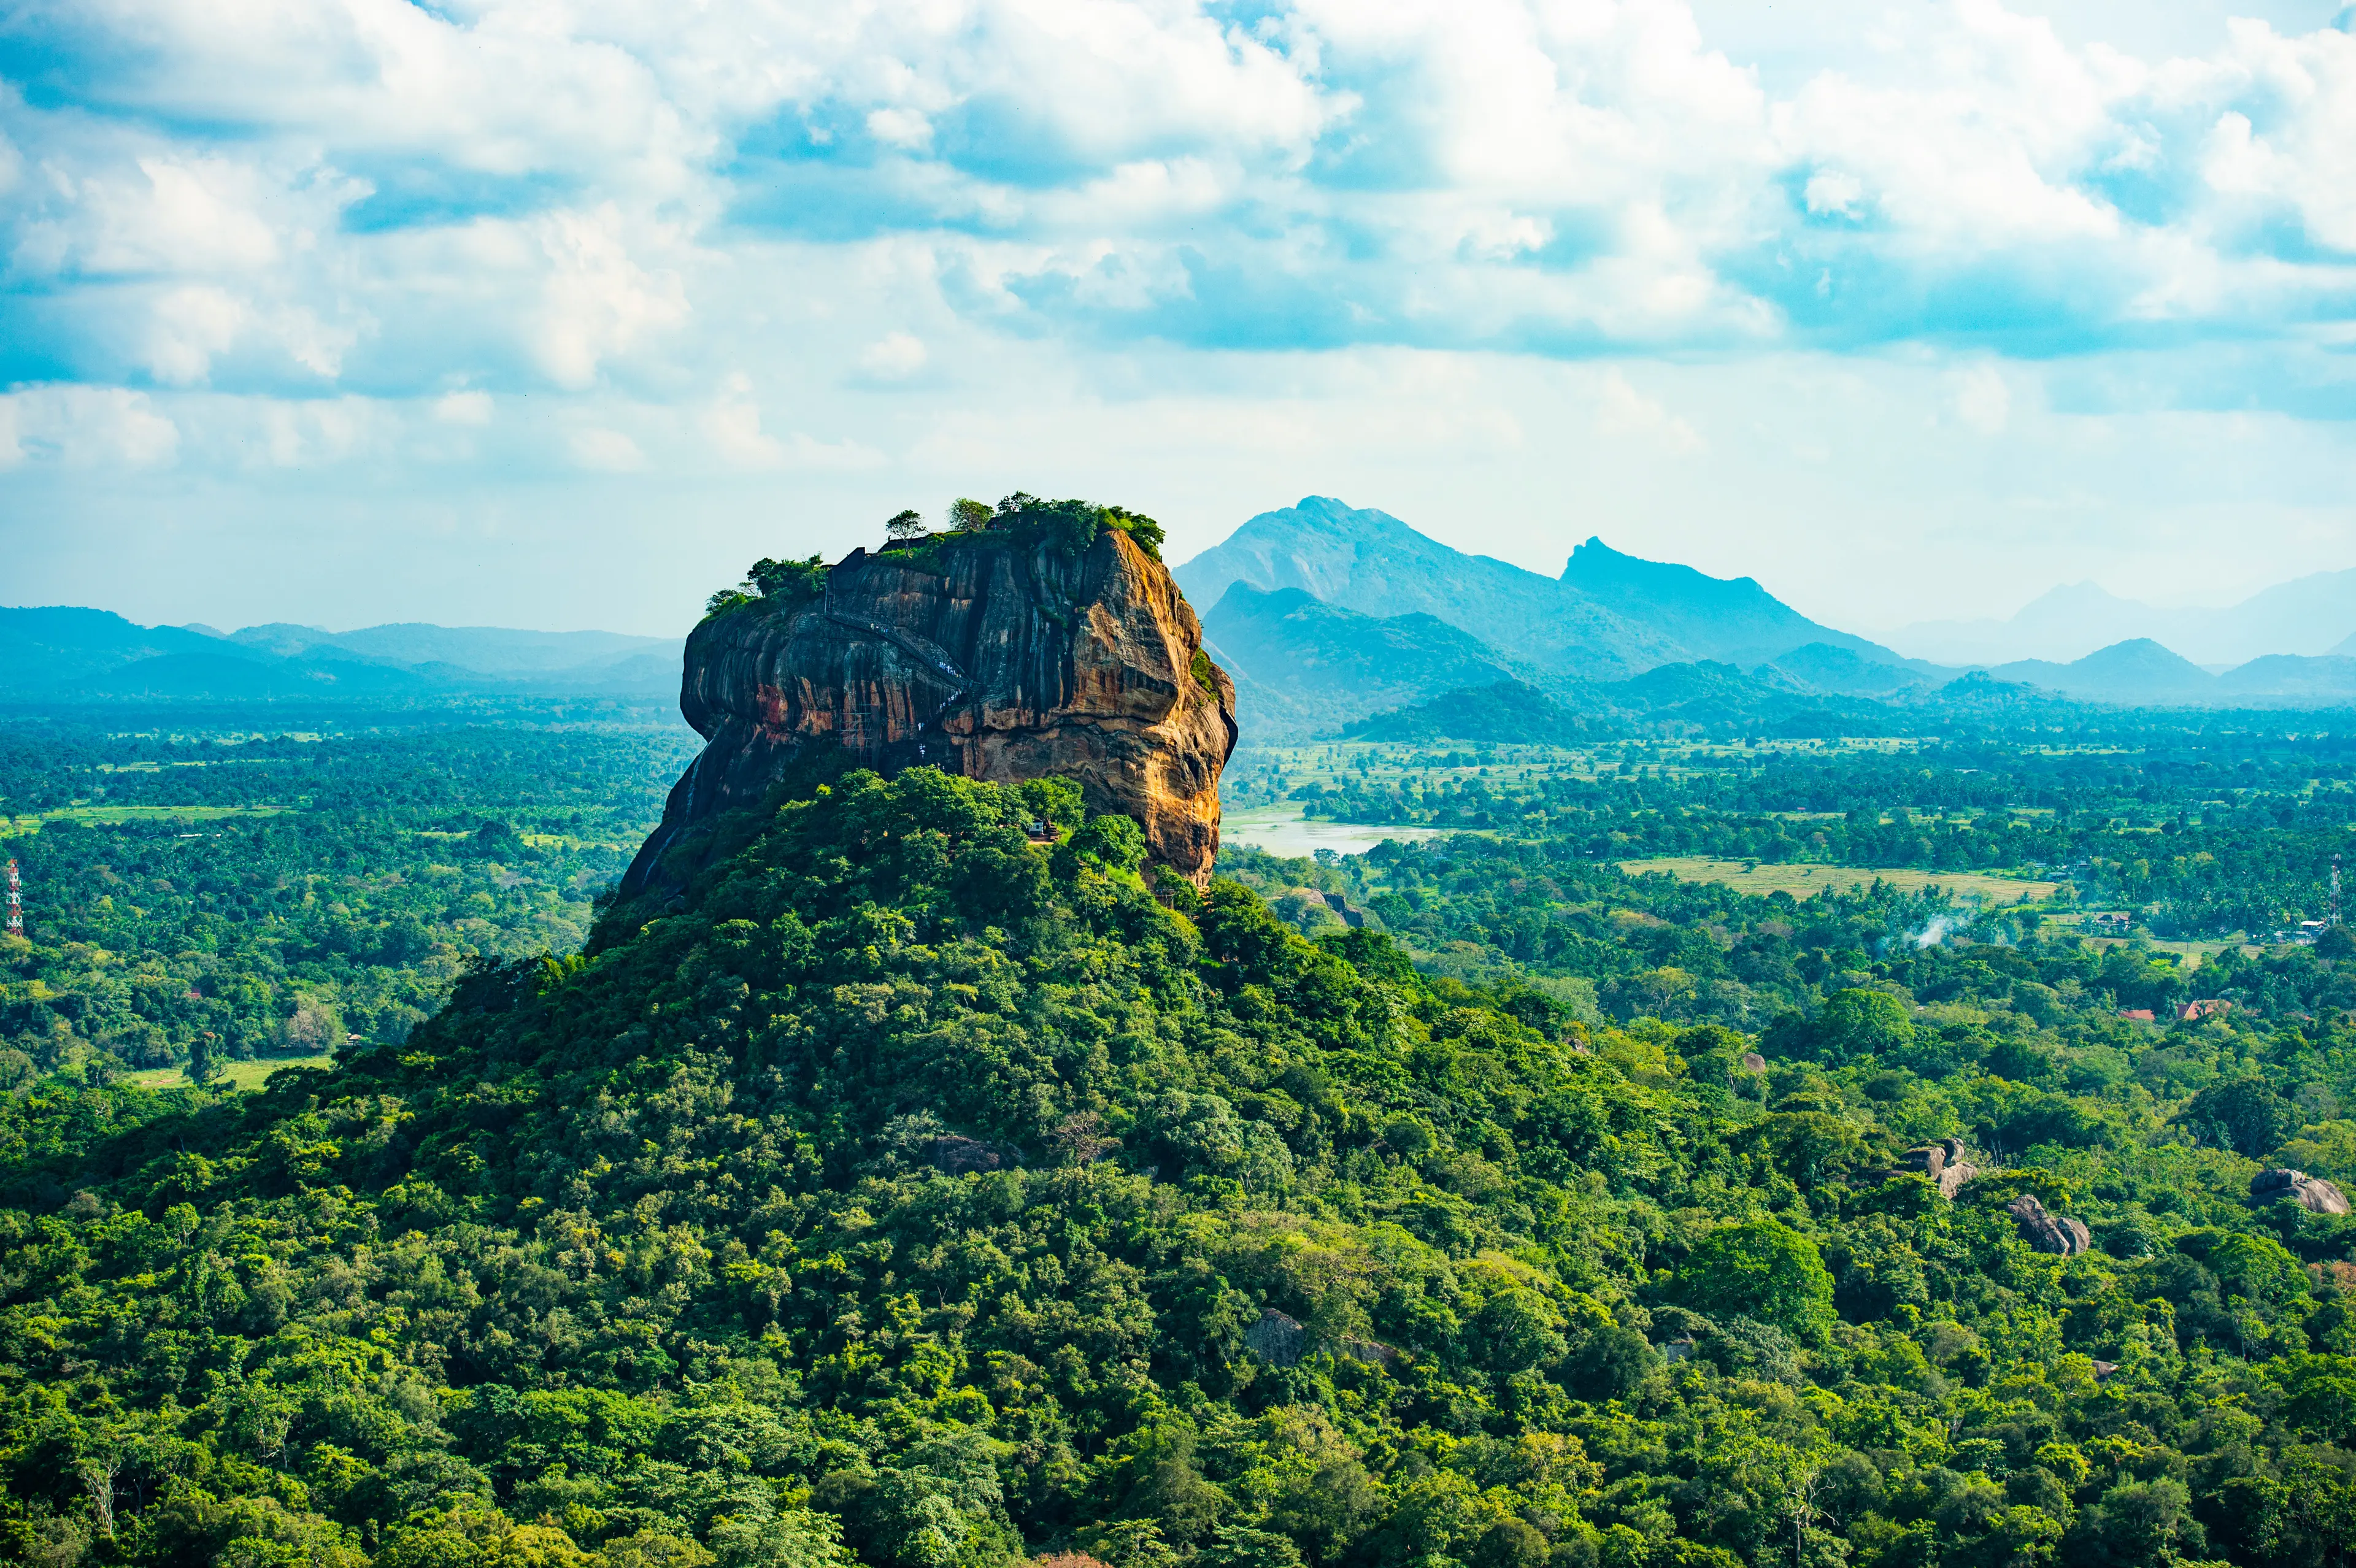 Sigiriya, also known as the Lion Rock